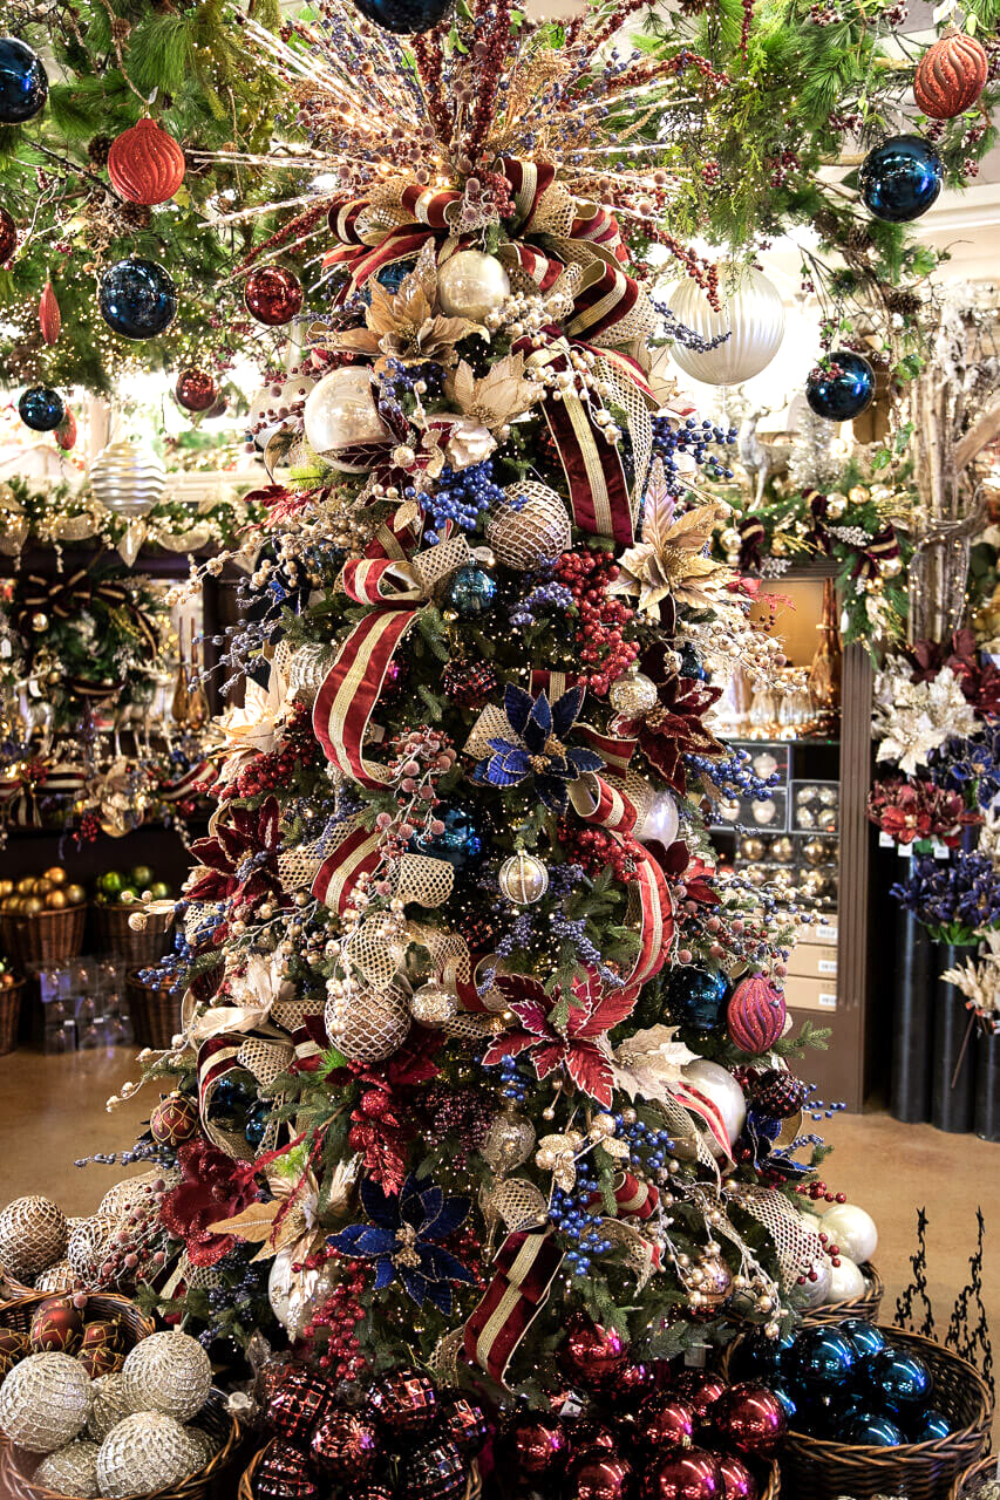 Jewel-toned Christmas tree